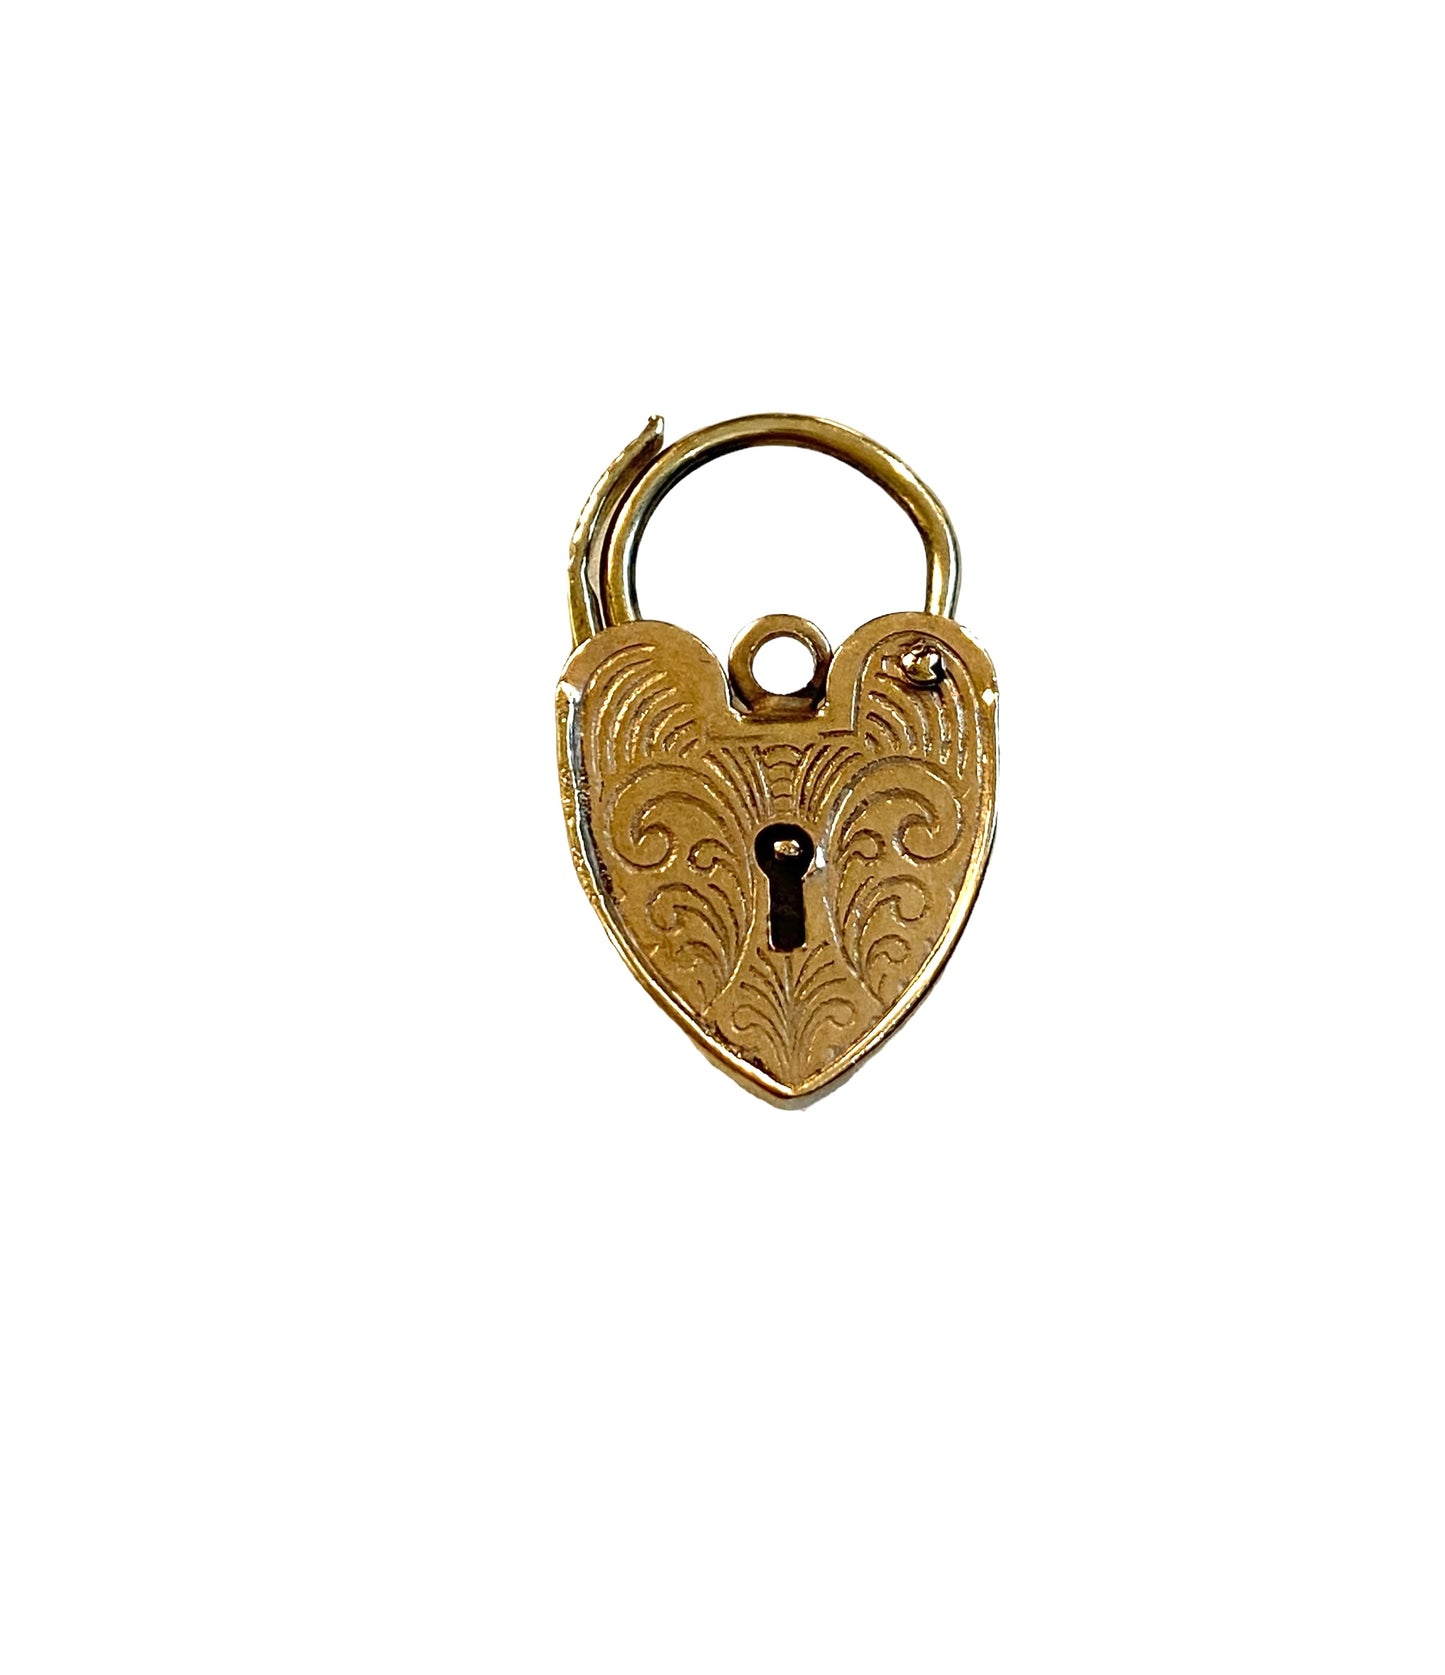 9ct vintage ornate padlock charm by S&K circa 1977